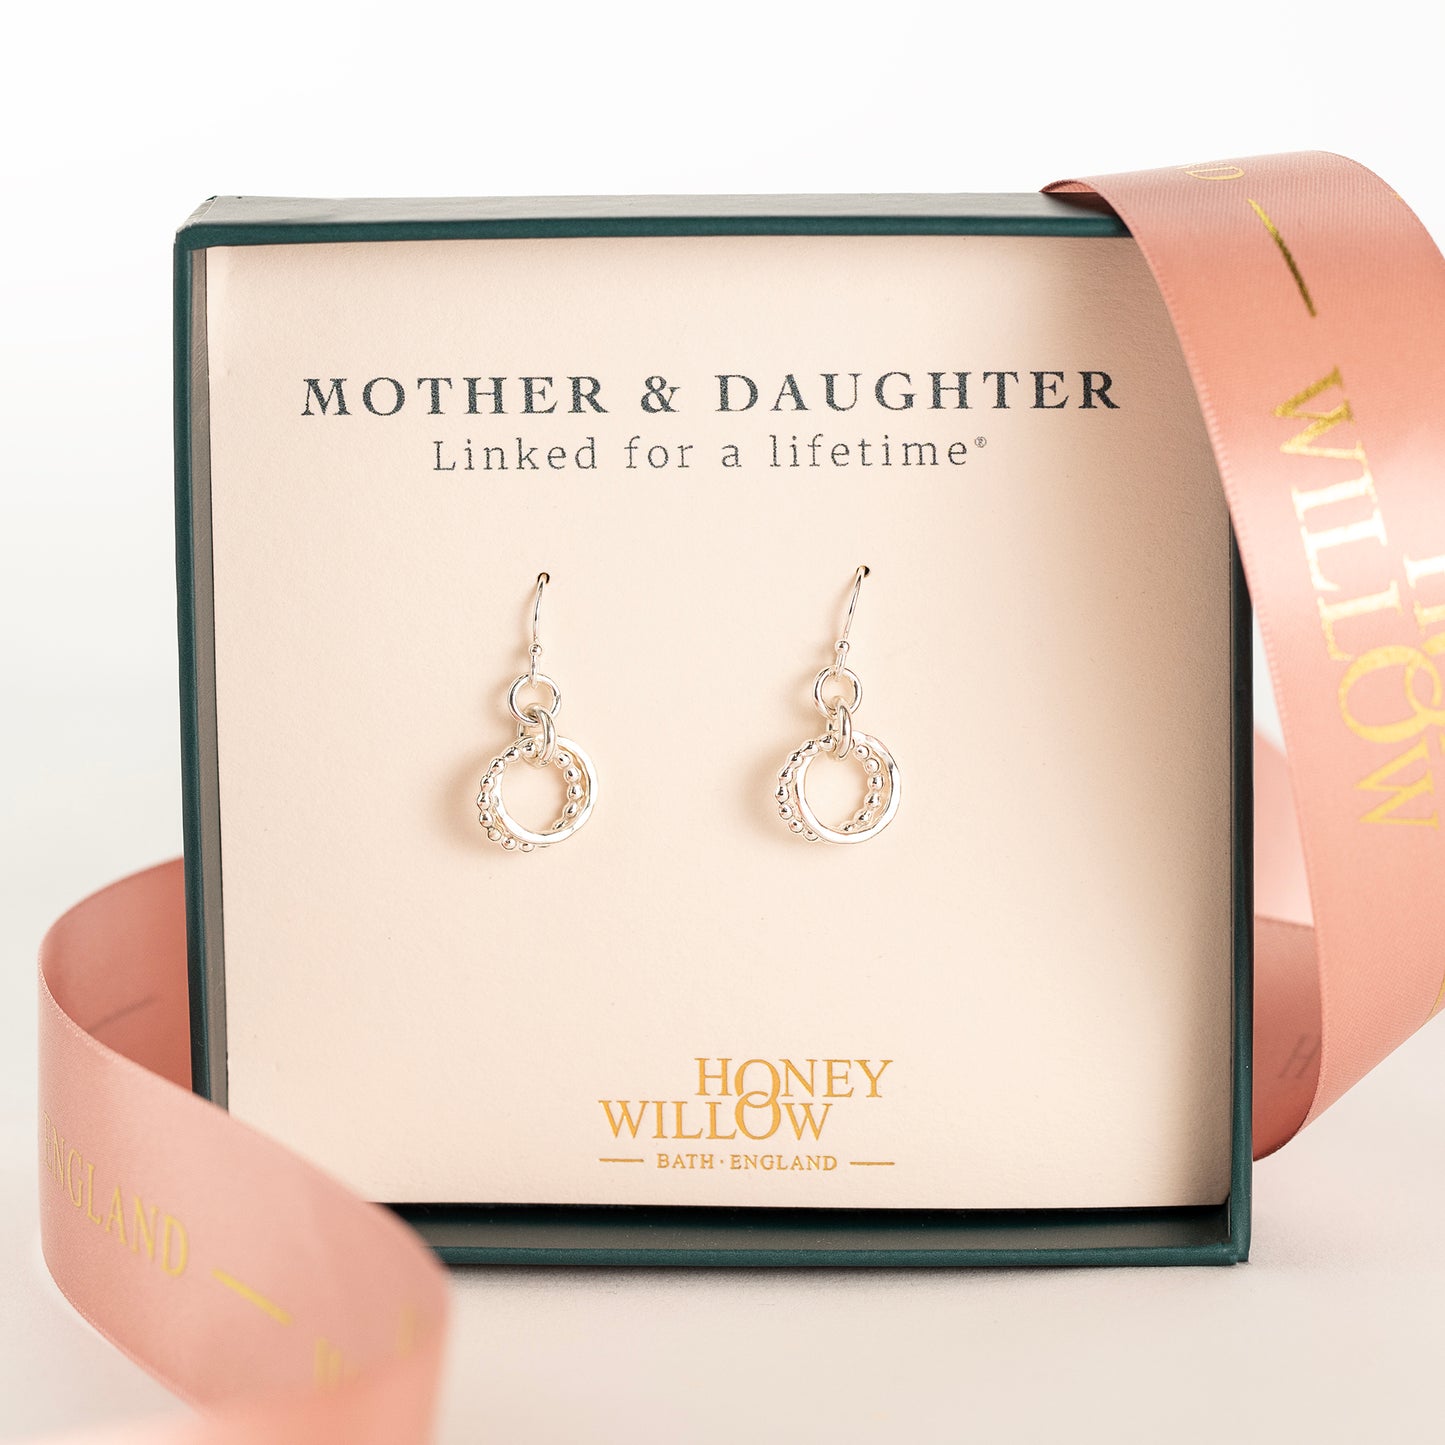 Mother & Daughter Earrings - Silver Love Knot Earrings